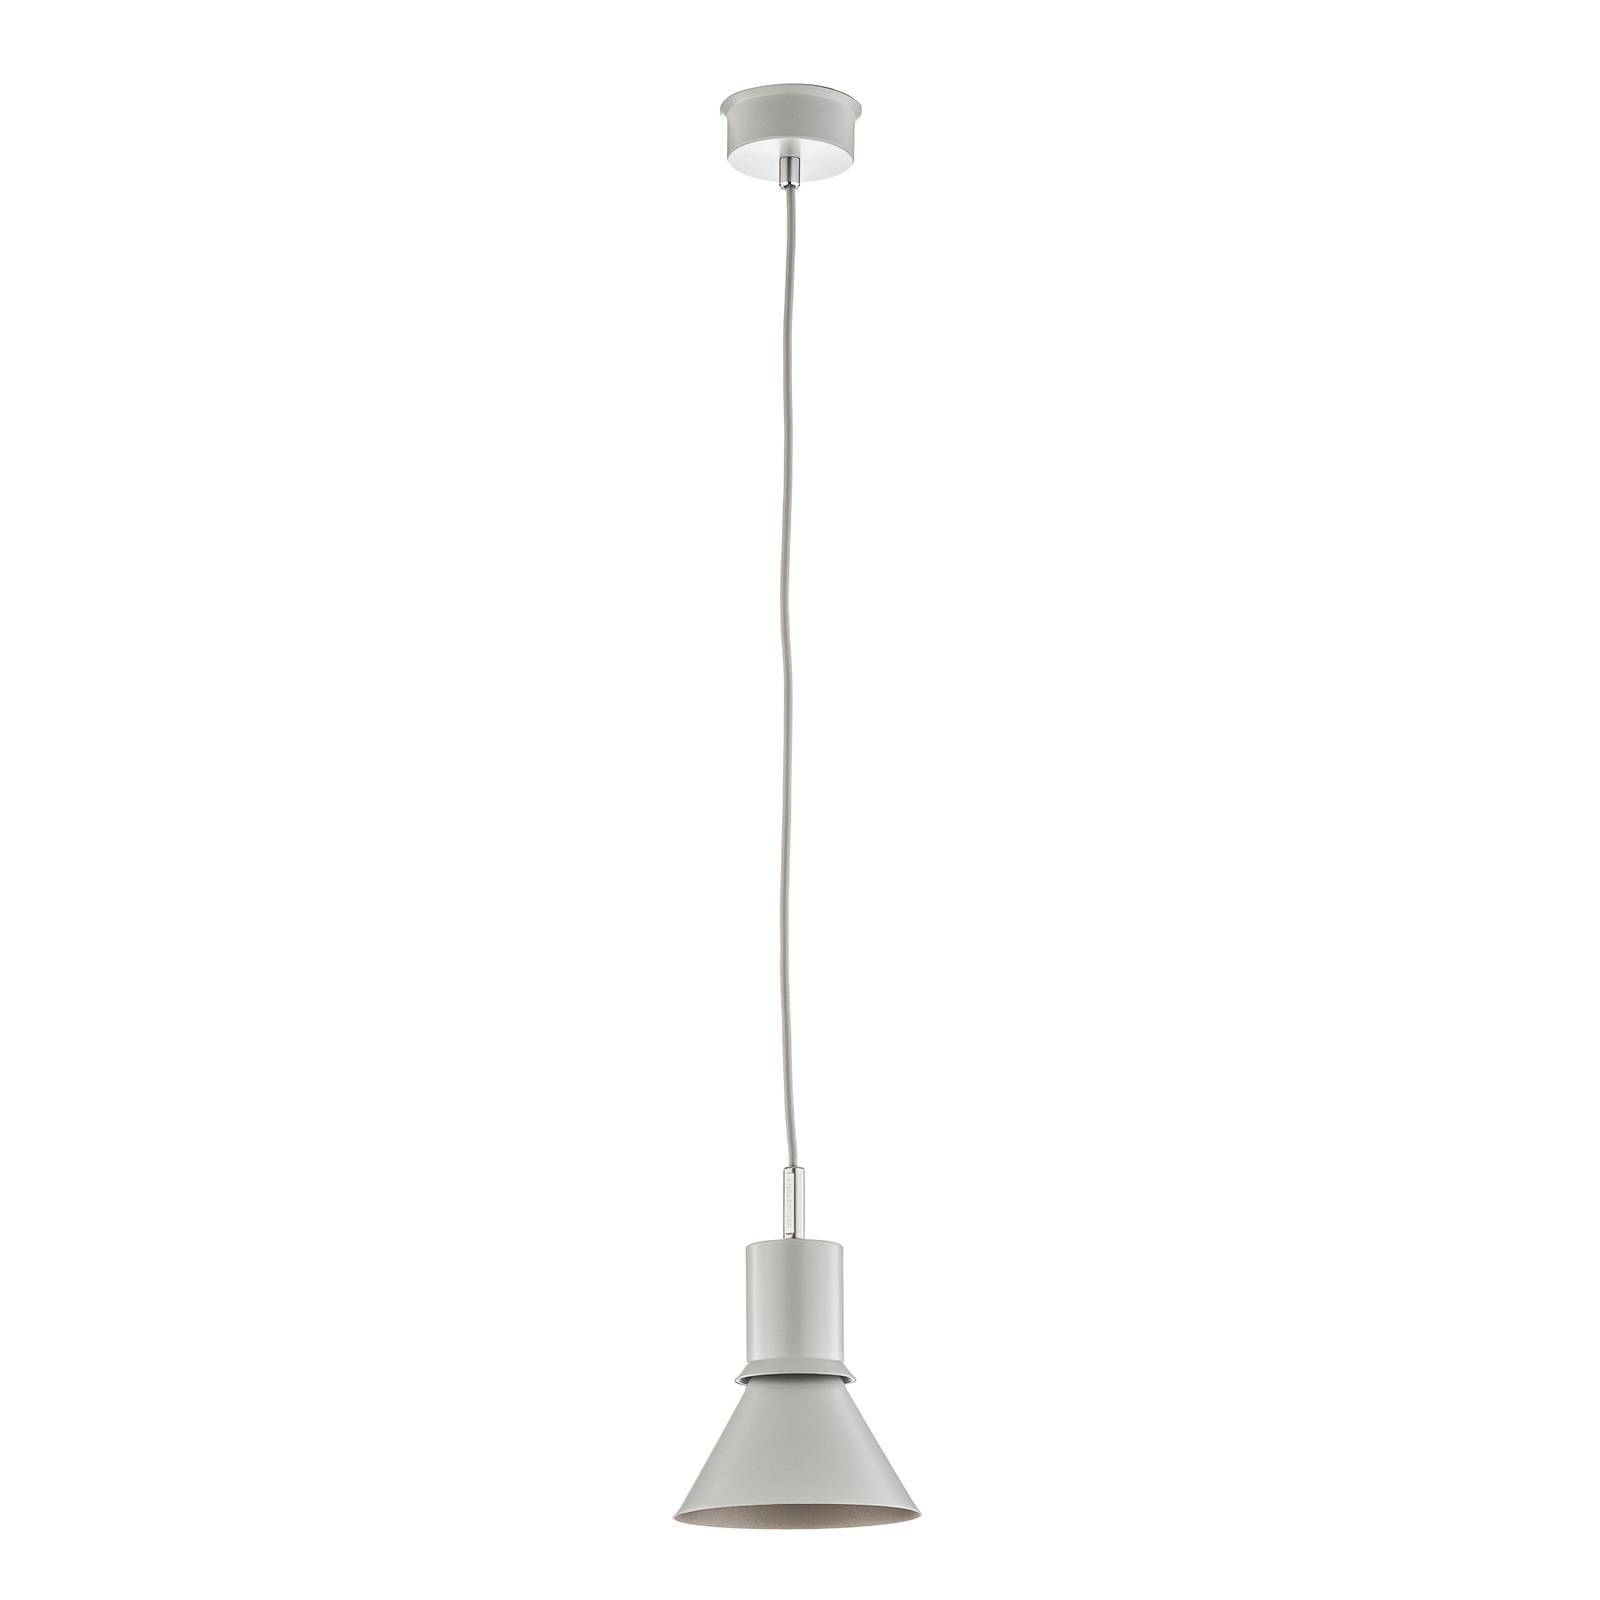 Anglepoise Type 80 hanging light, mist grey